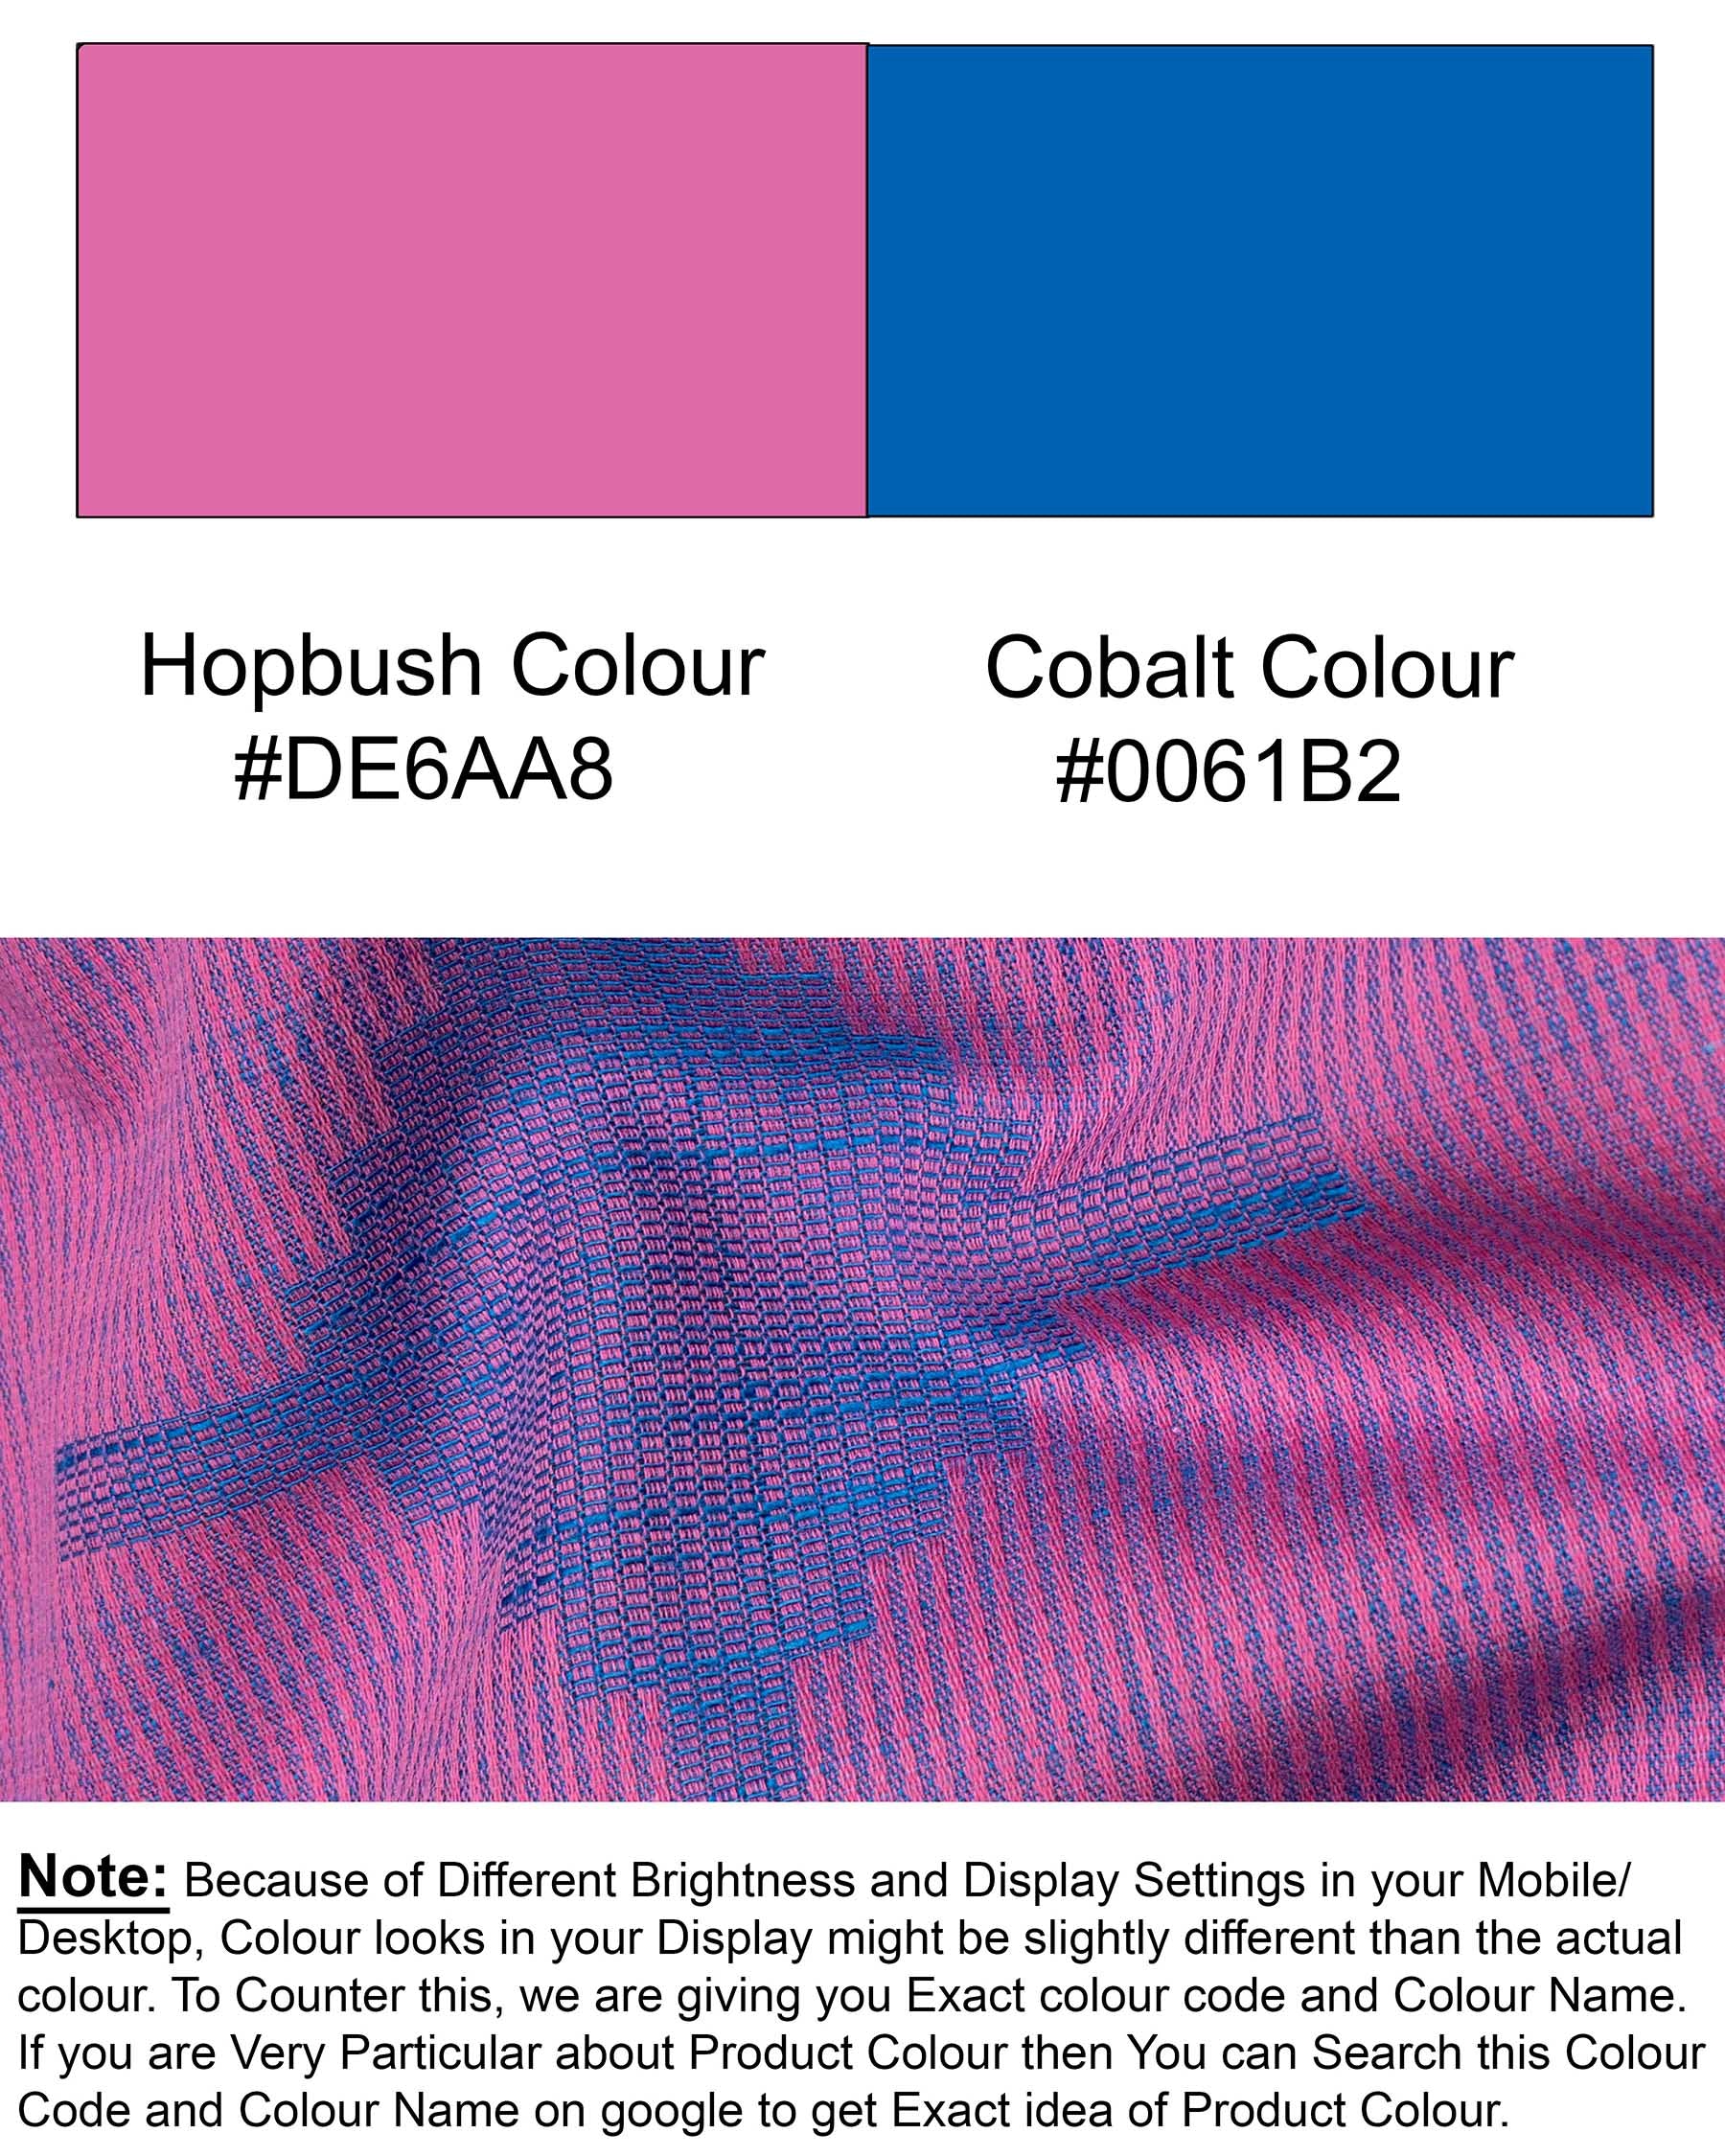 Hop Bush Pink Dobby Textured Premium Giza Cotton Shirt 6130-CA-38, 6130-CA-H-38, 6130-CA-39, 6130-CA-H-39, 6130-CA-40, 6130-CA-H-40, 6130-CA-42, 6130-CA-H-42, 6130-CA-44, 6130-CA-H-44, 6130-CA-46, 6130-CA-H-46, 6130-CA-48, 6130-CA-H-48, 6130-CA-50, 6130-CA-H-50, 6130-CA-52, 6130-CA-H-52